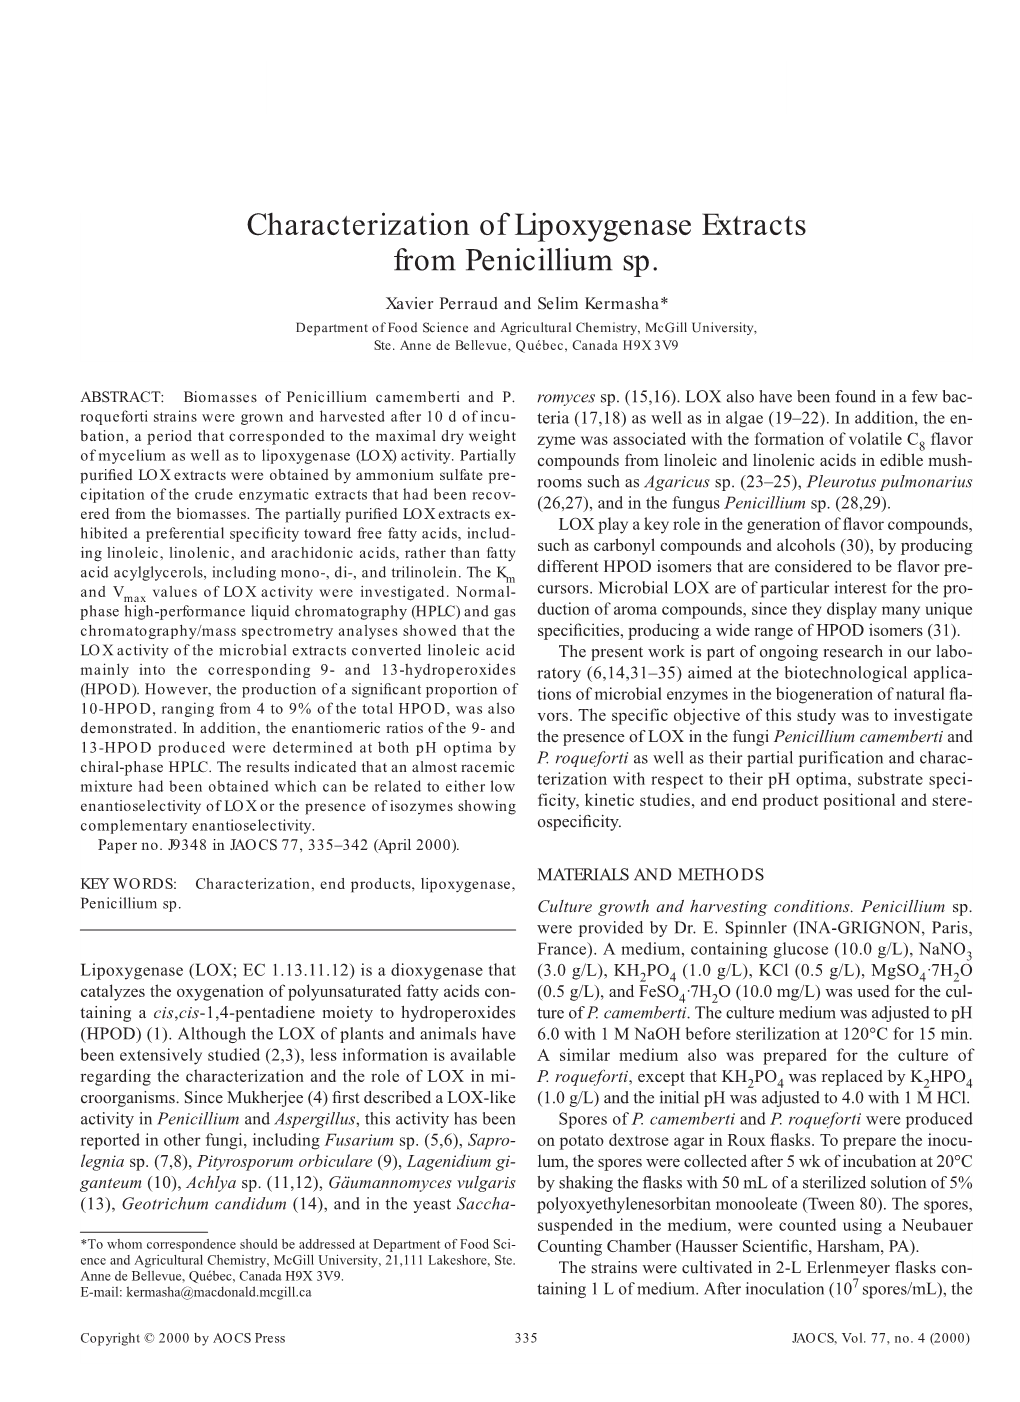 Characterization of Lipoxygenase Extracts from Penicillium Sp